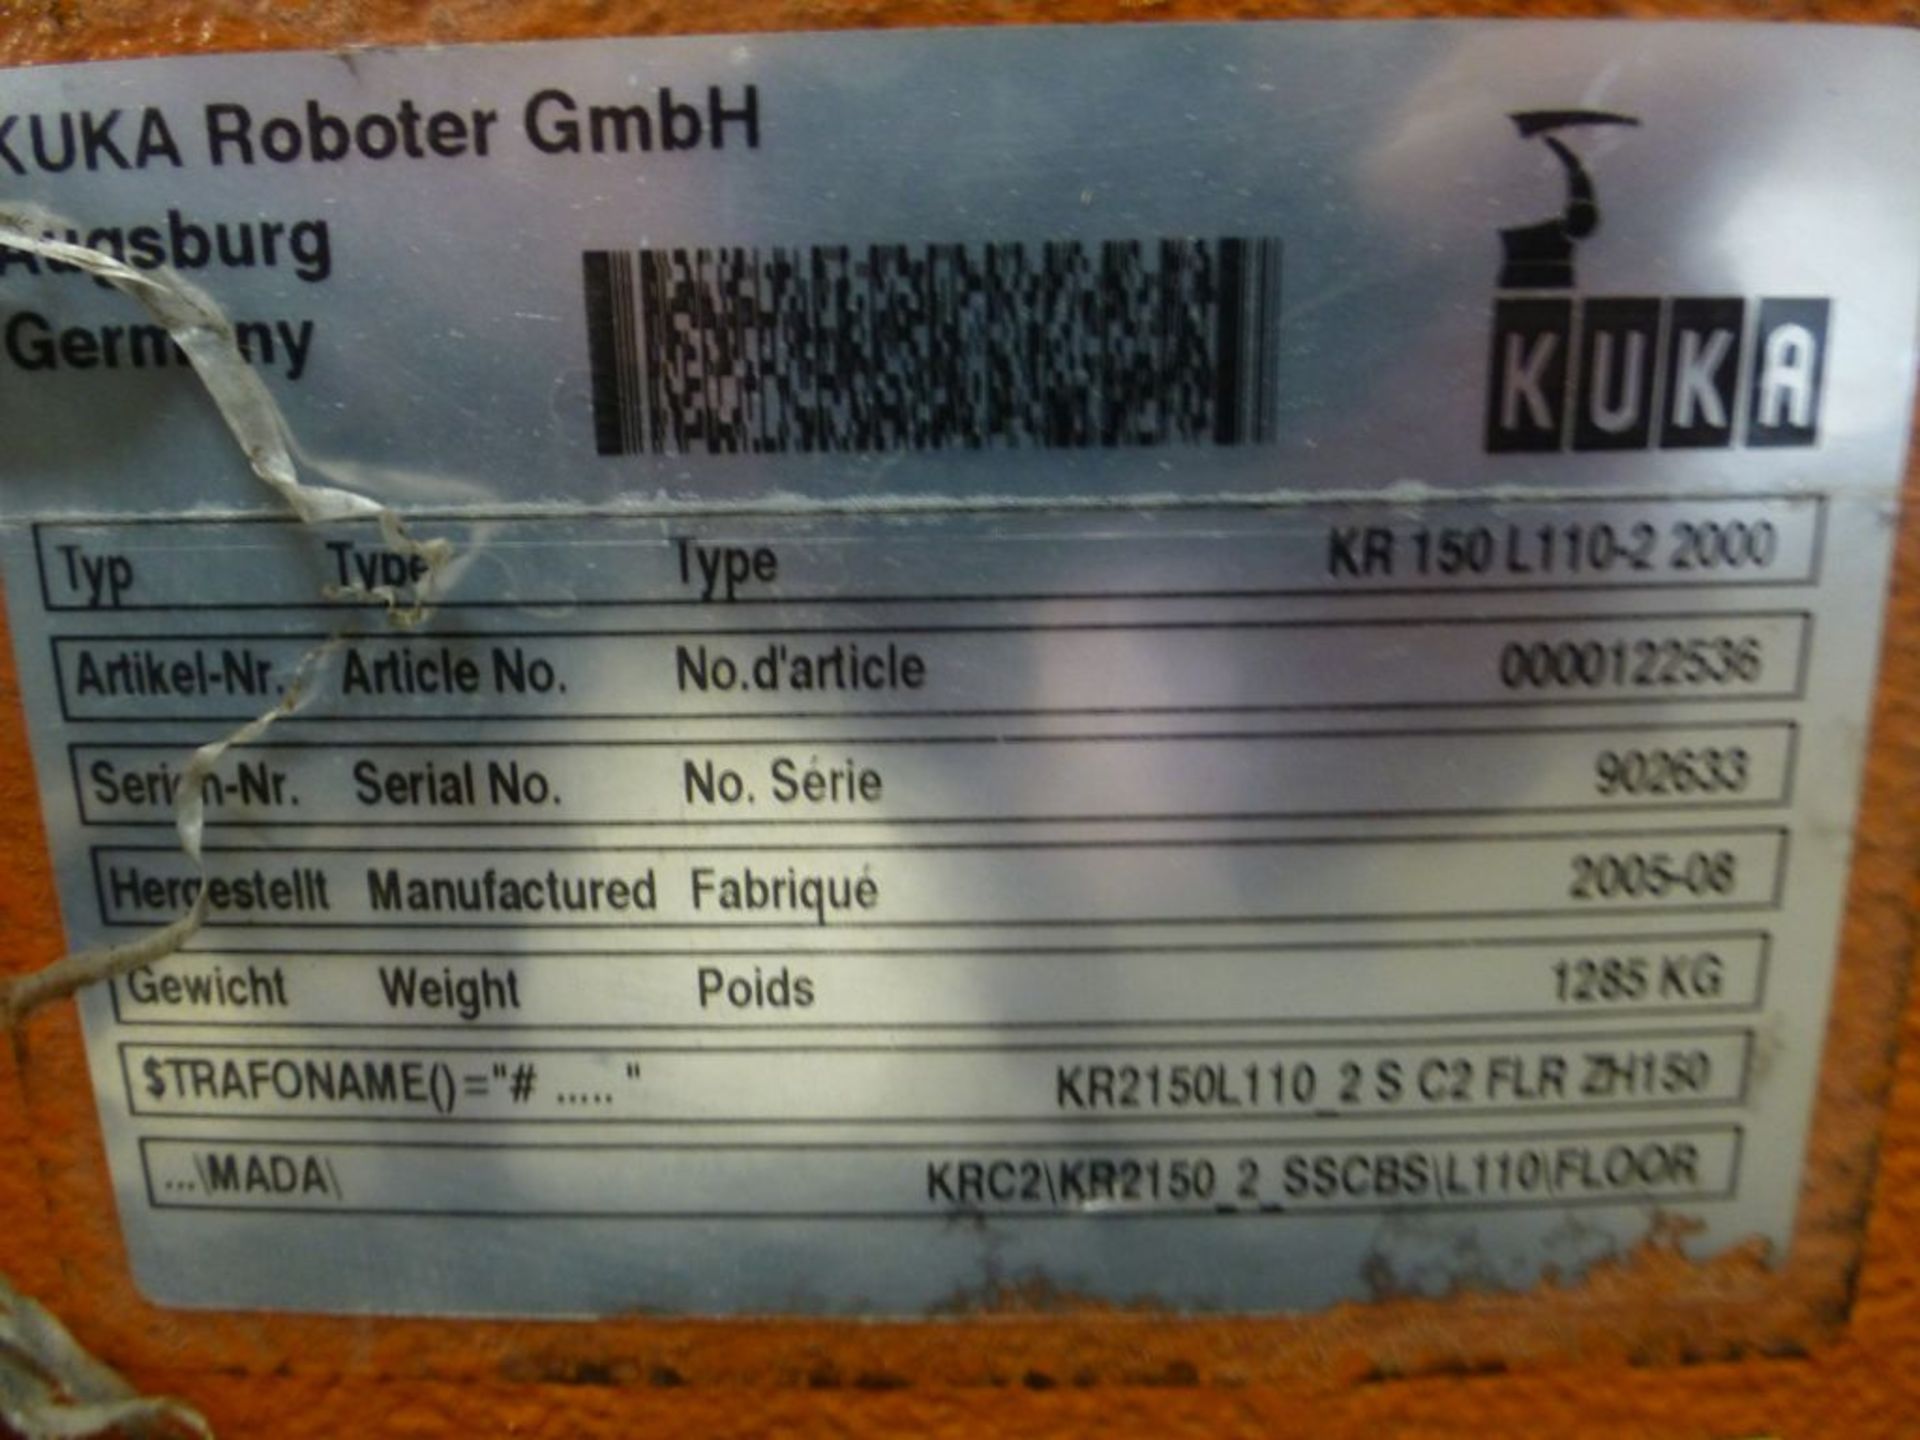 Kuka Robotic Arm w/KRC 2 Controller|Type: KR 150-410-2-2000; Serial No. 902633; MFG: 2005-08; - Image 27 of 27